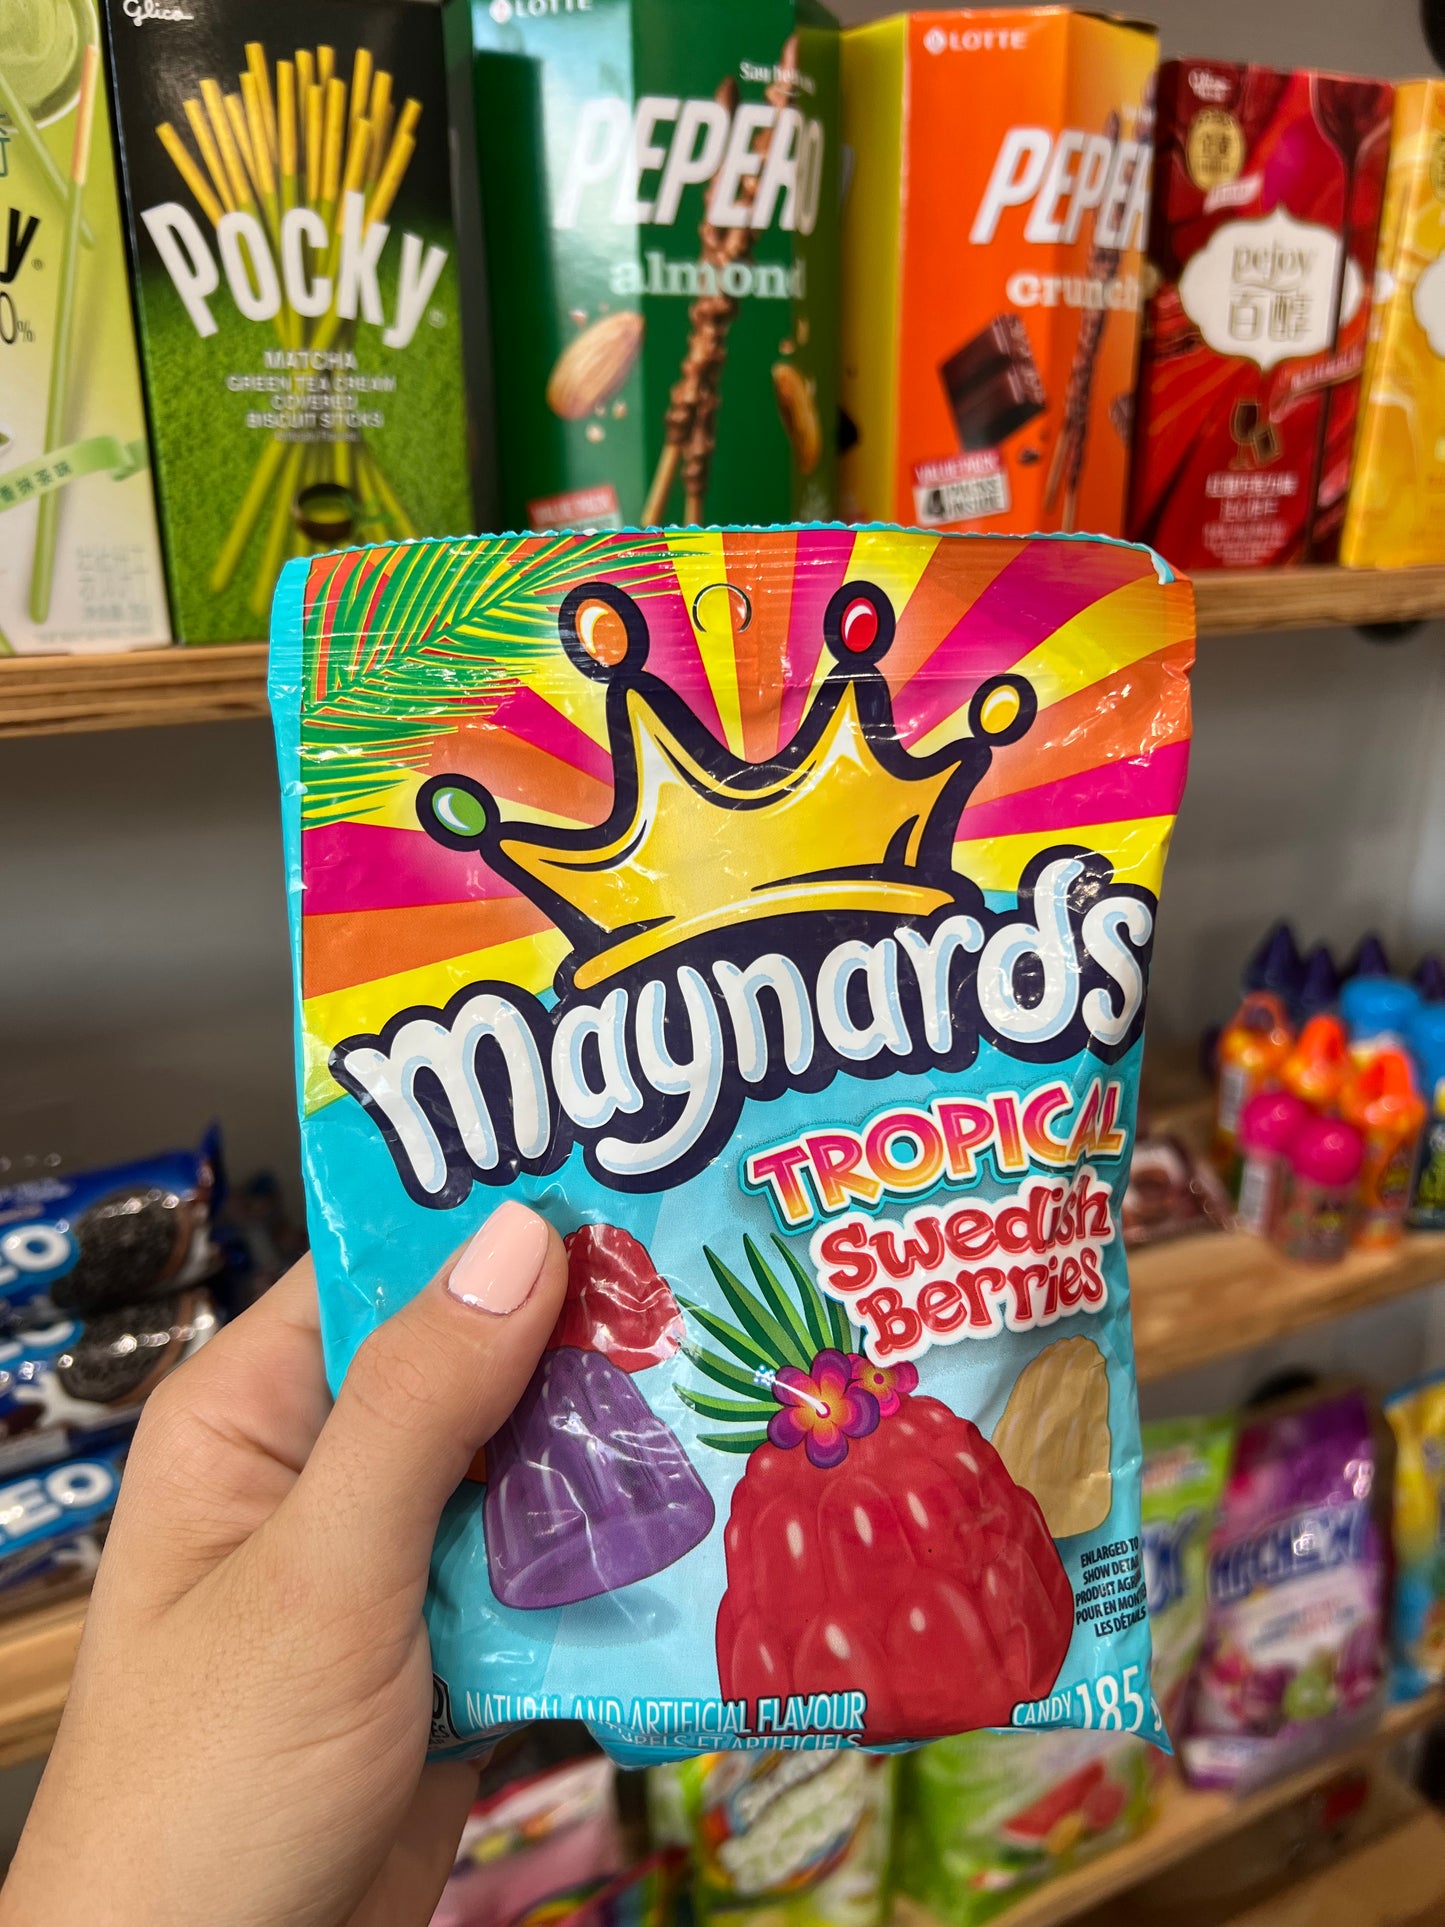 Maynard’s Tropical Swedish Berries